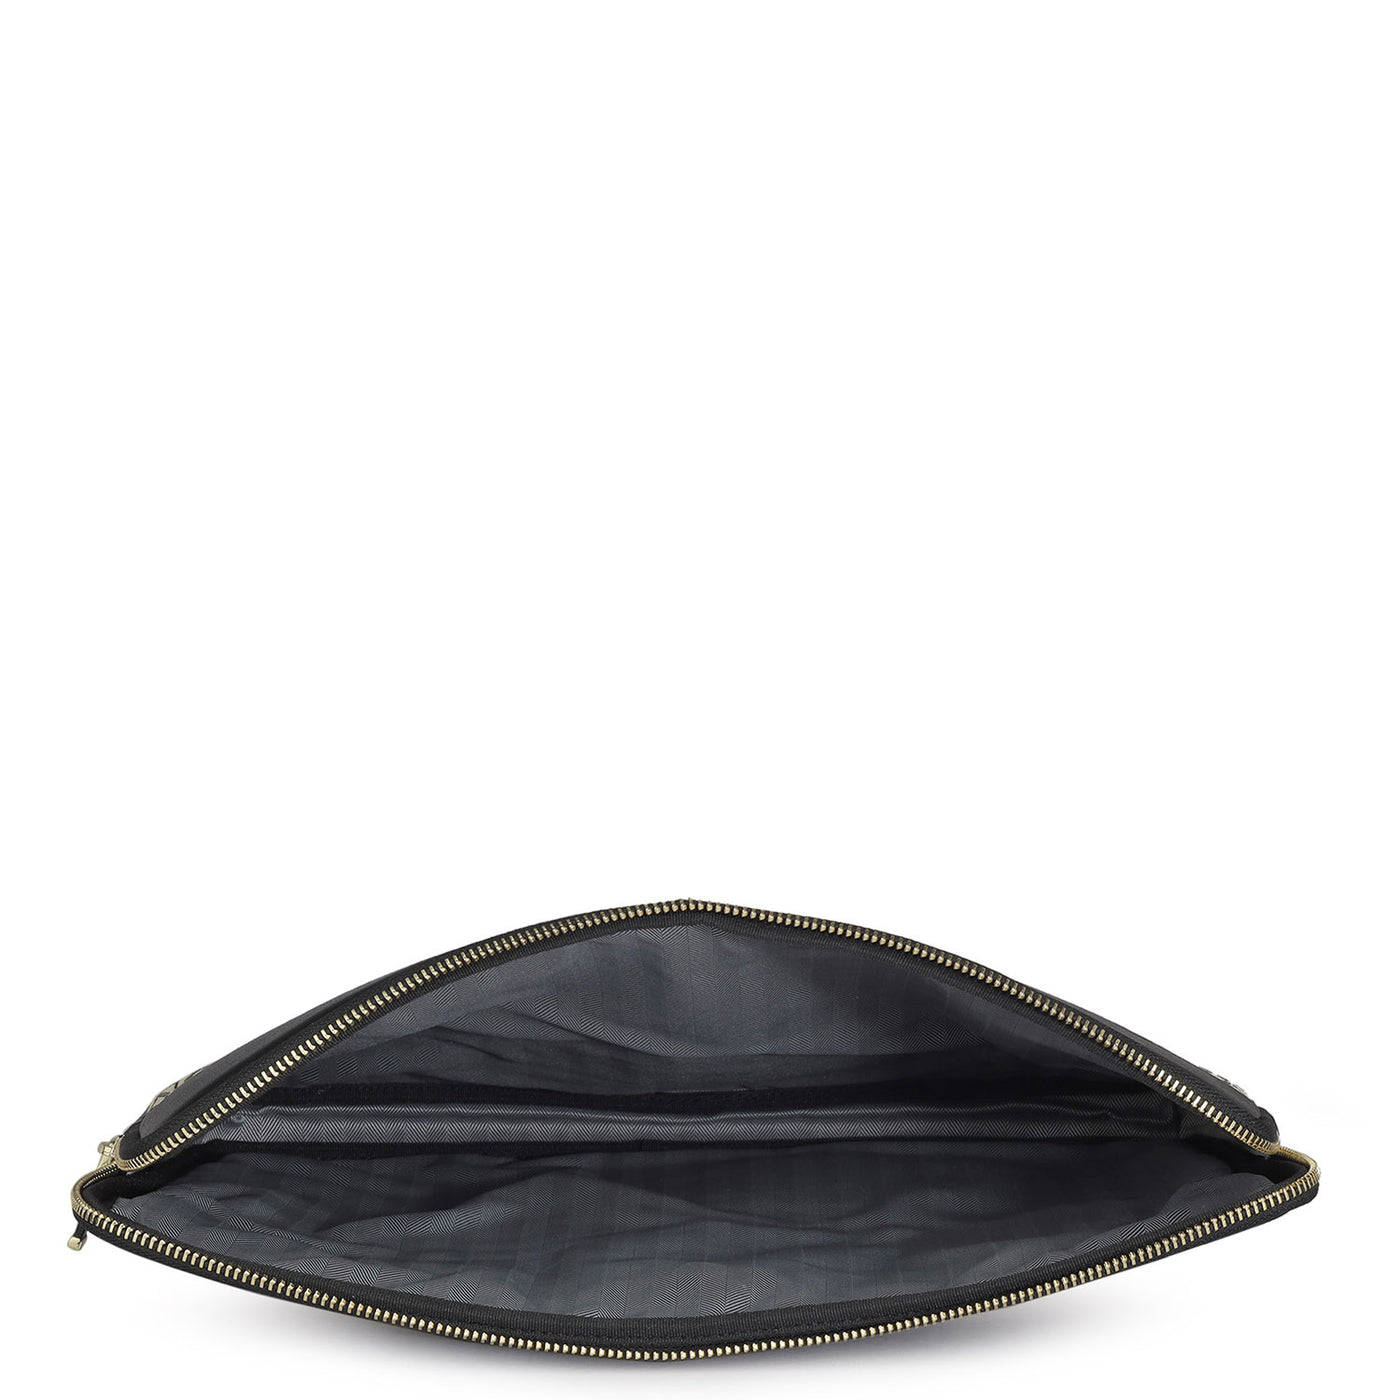 Beige & Black Canvas Leather Laptop Sleeve - Upto 15"